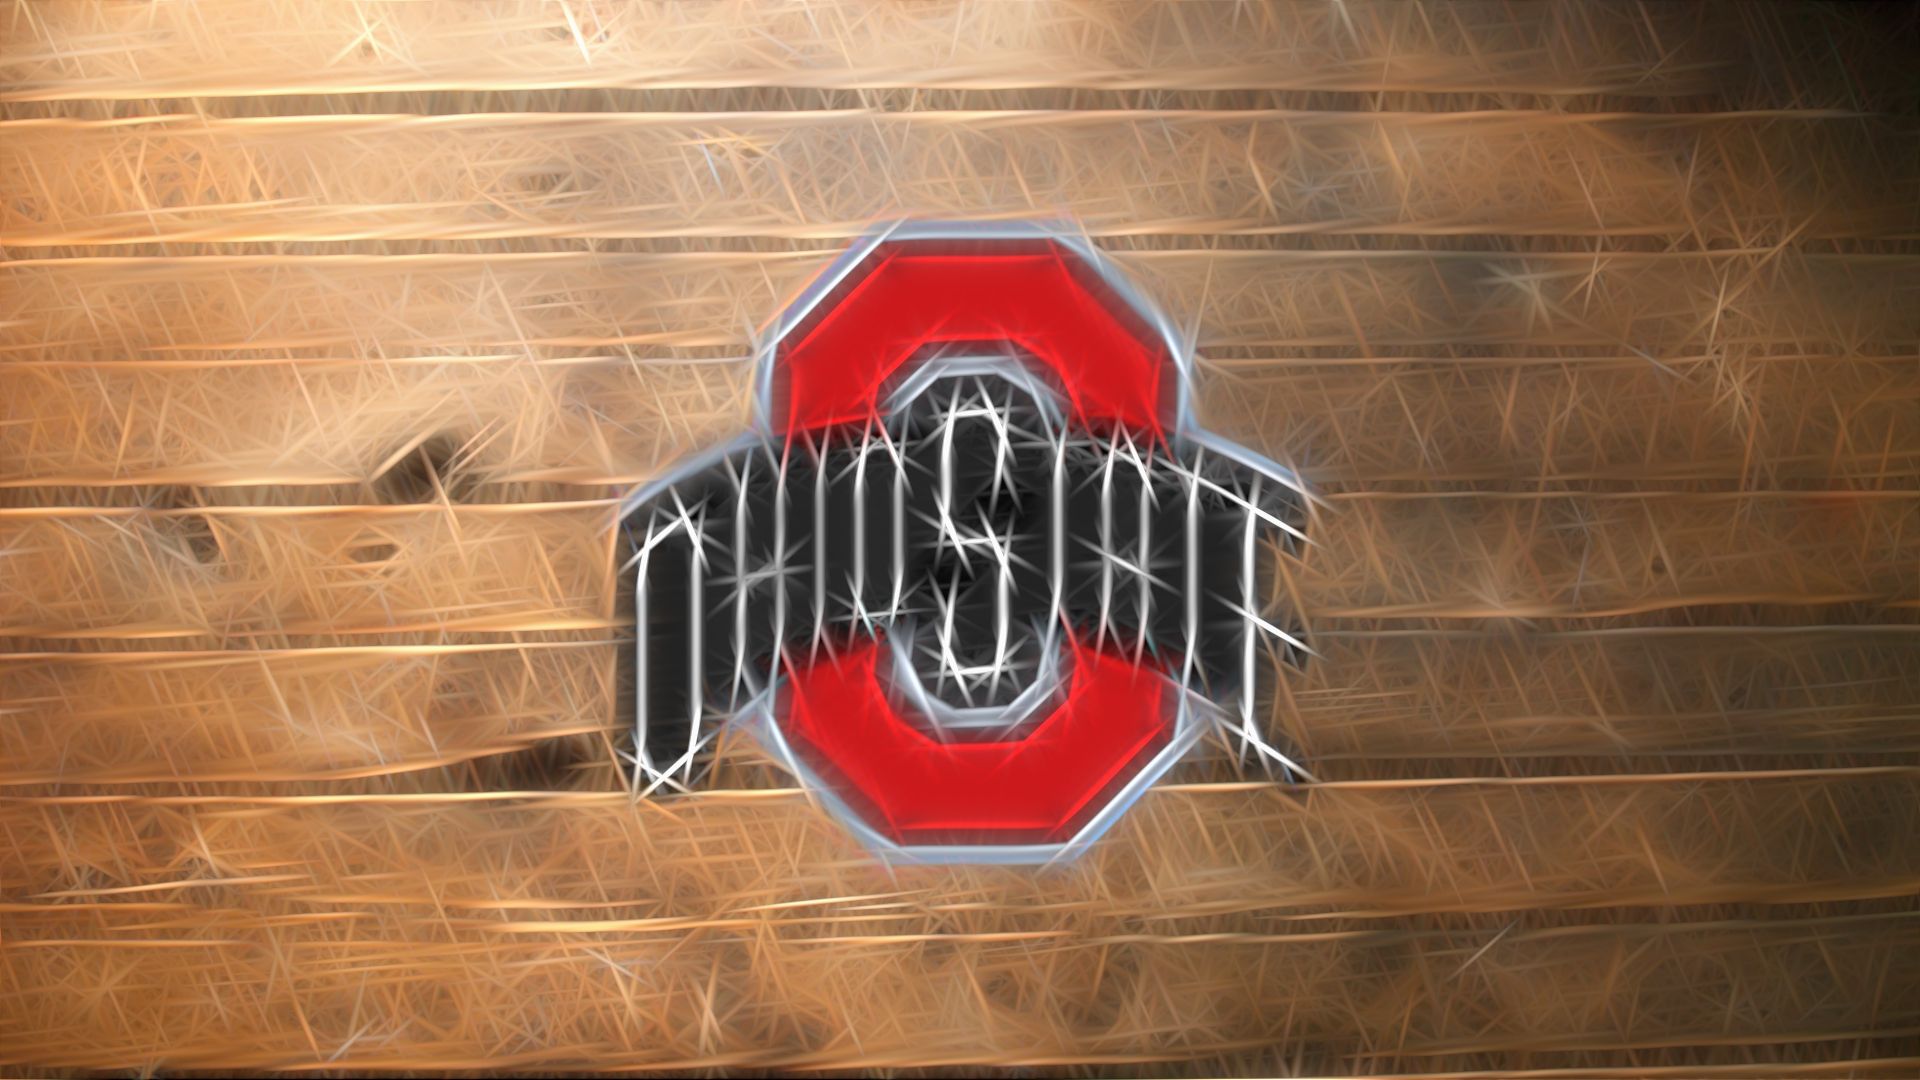 OSU Wallpaper 207 - Ohio State Football Wallpaper 29089641 - Fanpop